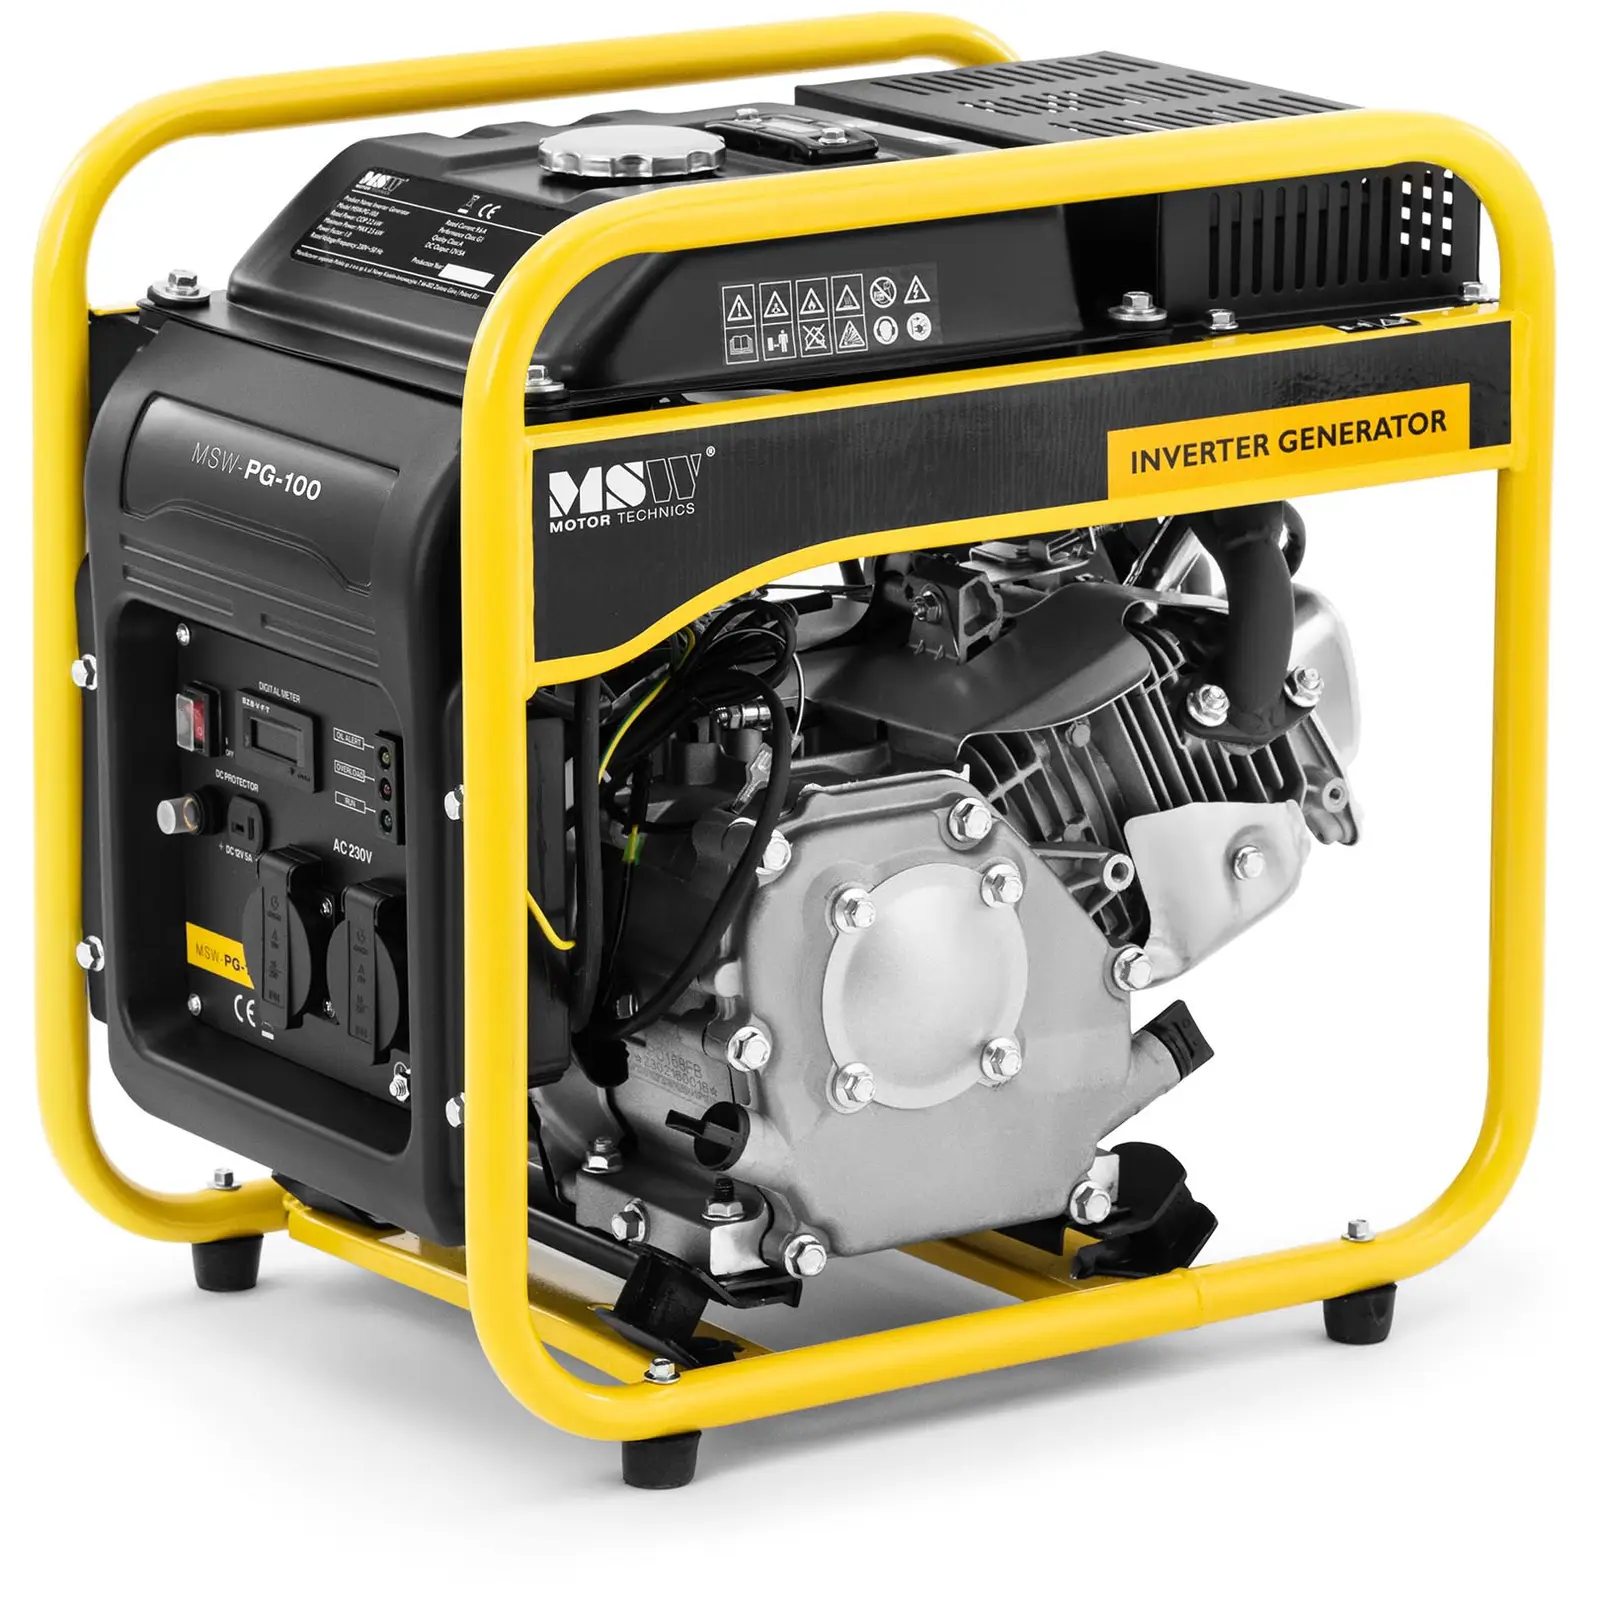 Inverter generator benzin - 3500 W - 230 V AC - startsnor